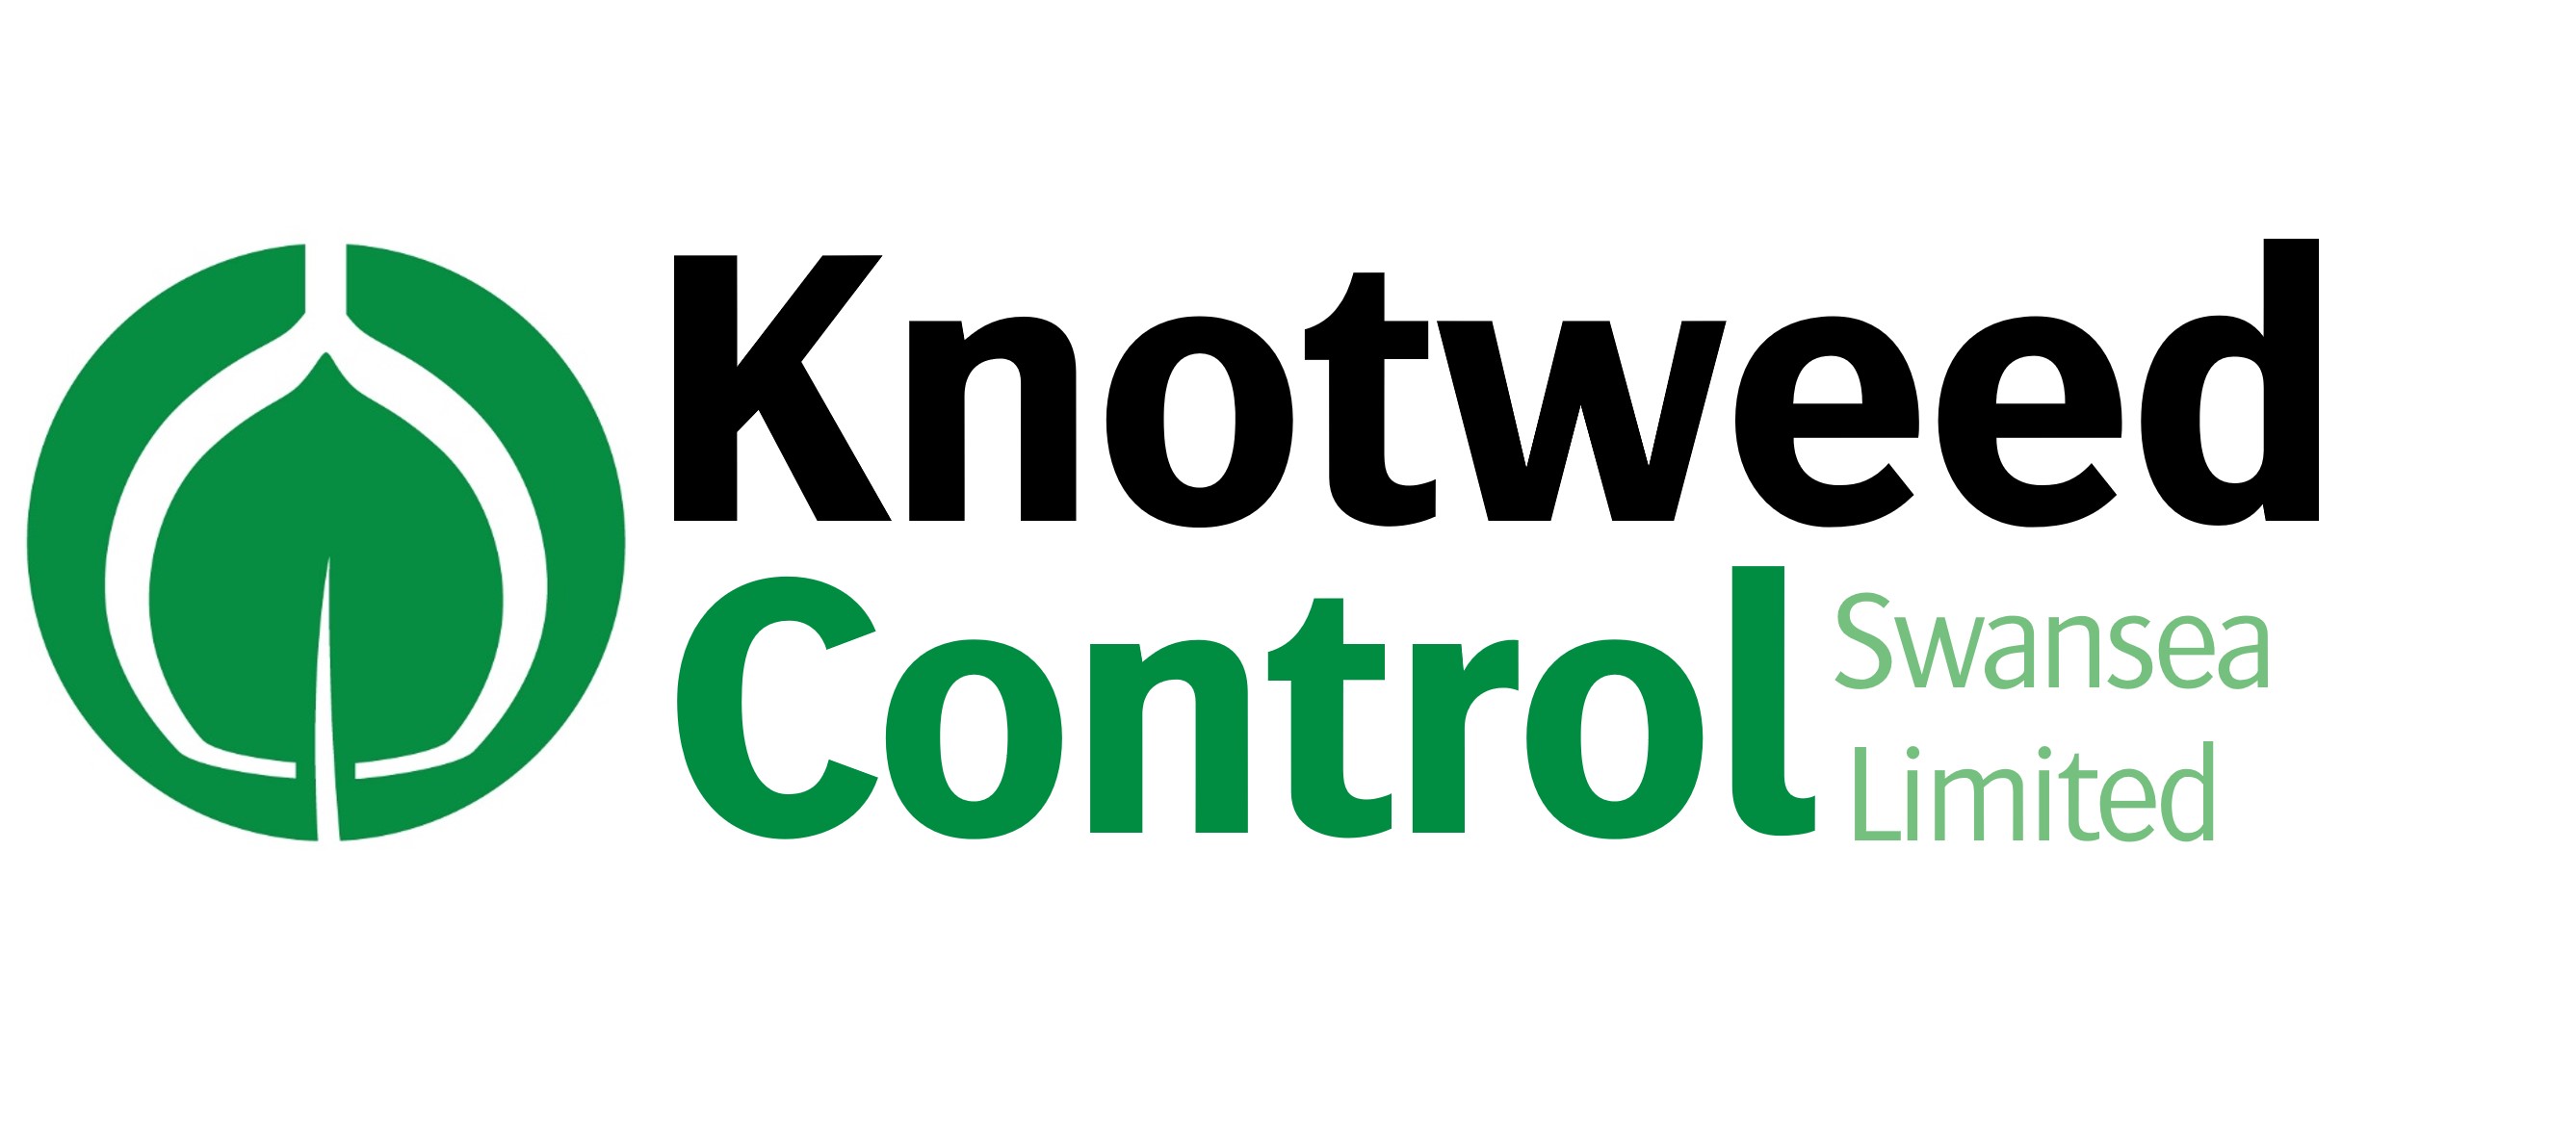 Knotweed Control Swansea Limited logo